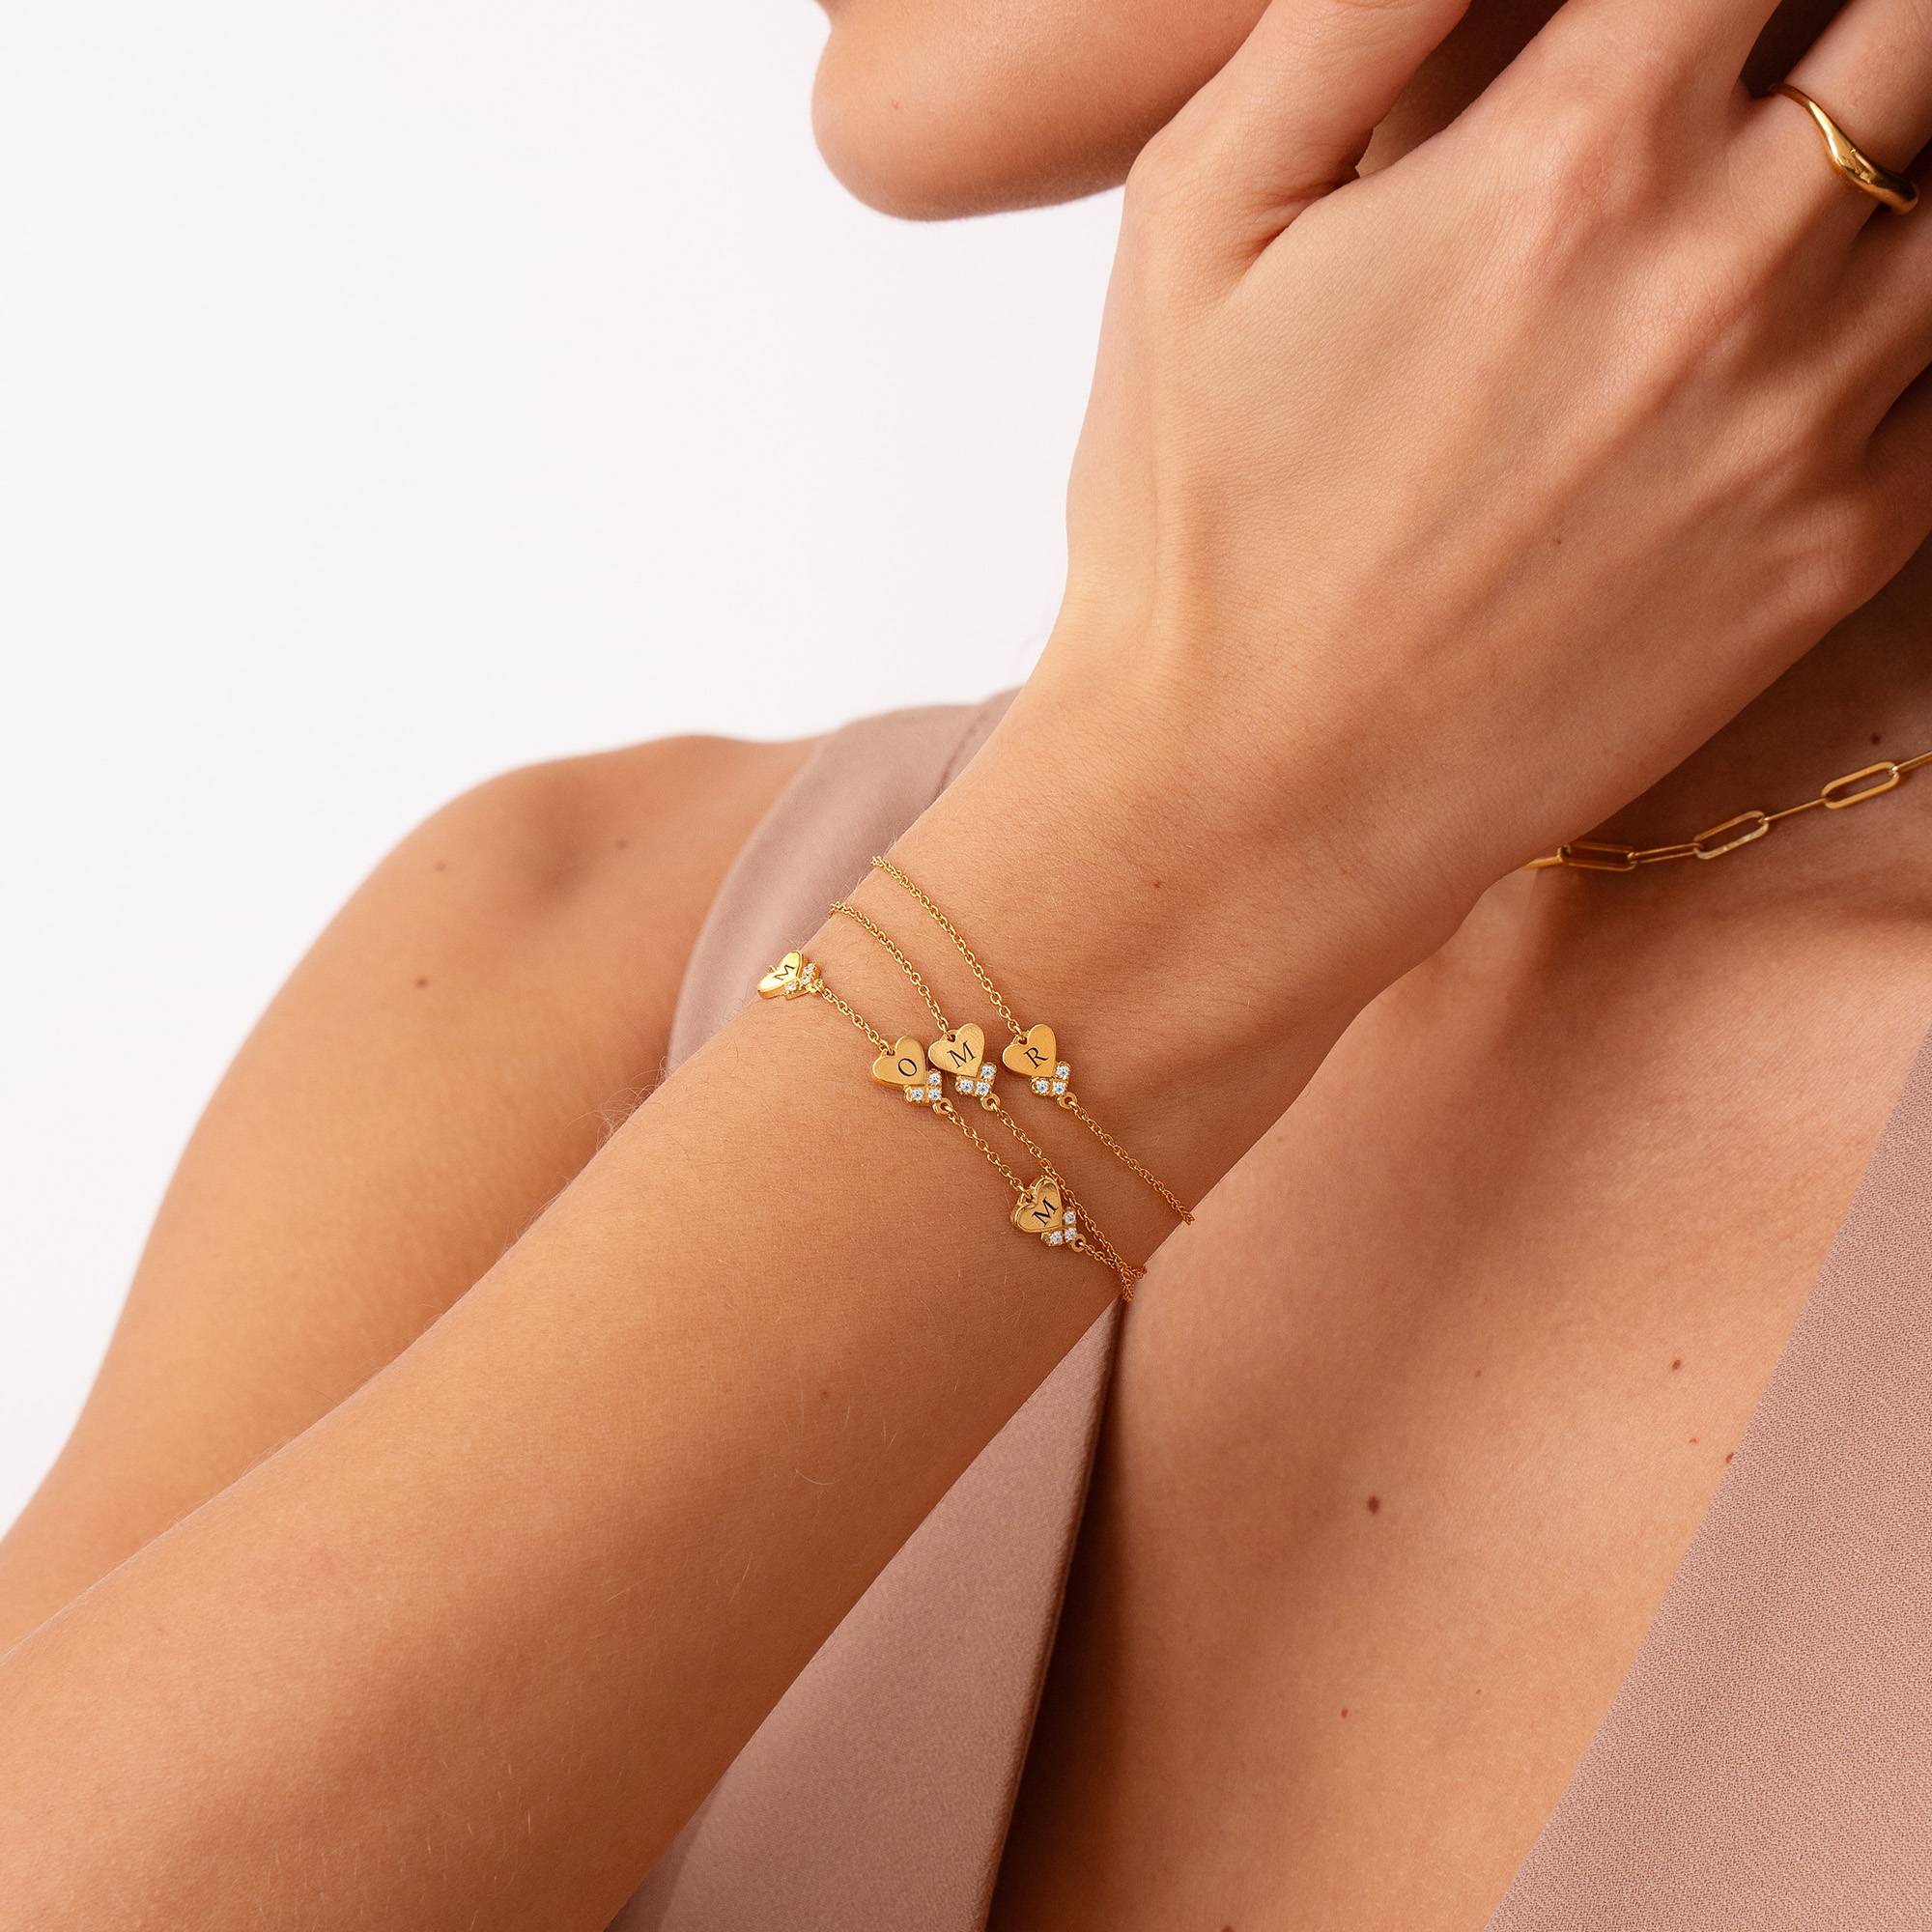 Dakota Heart Initial Bracelet with Diamonds in 18ct Gold Vermeil-1 product photo